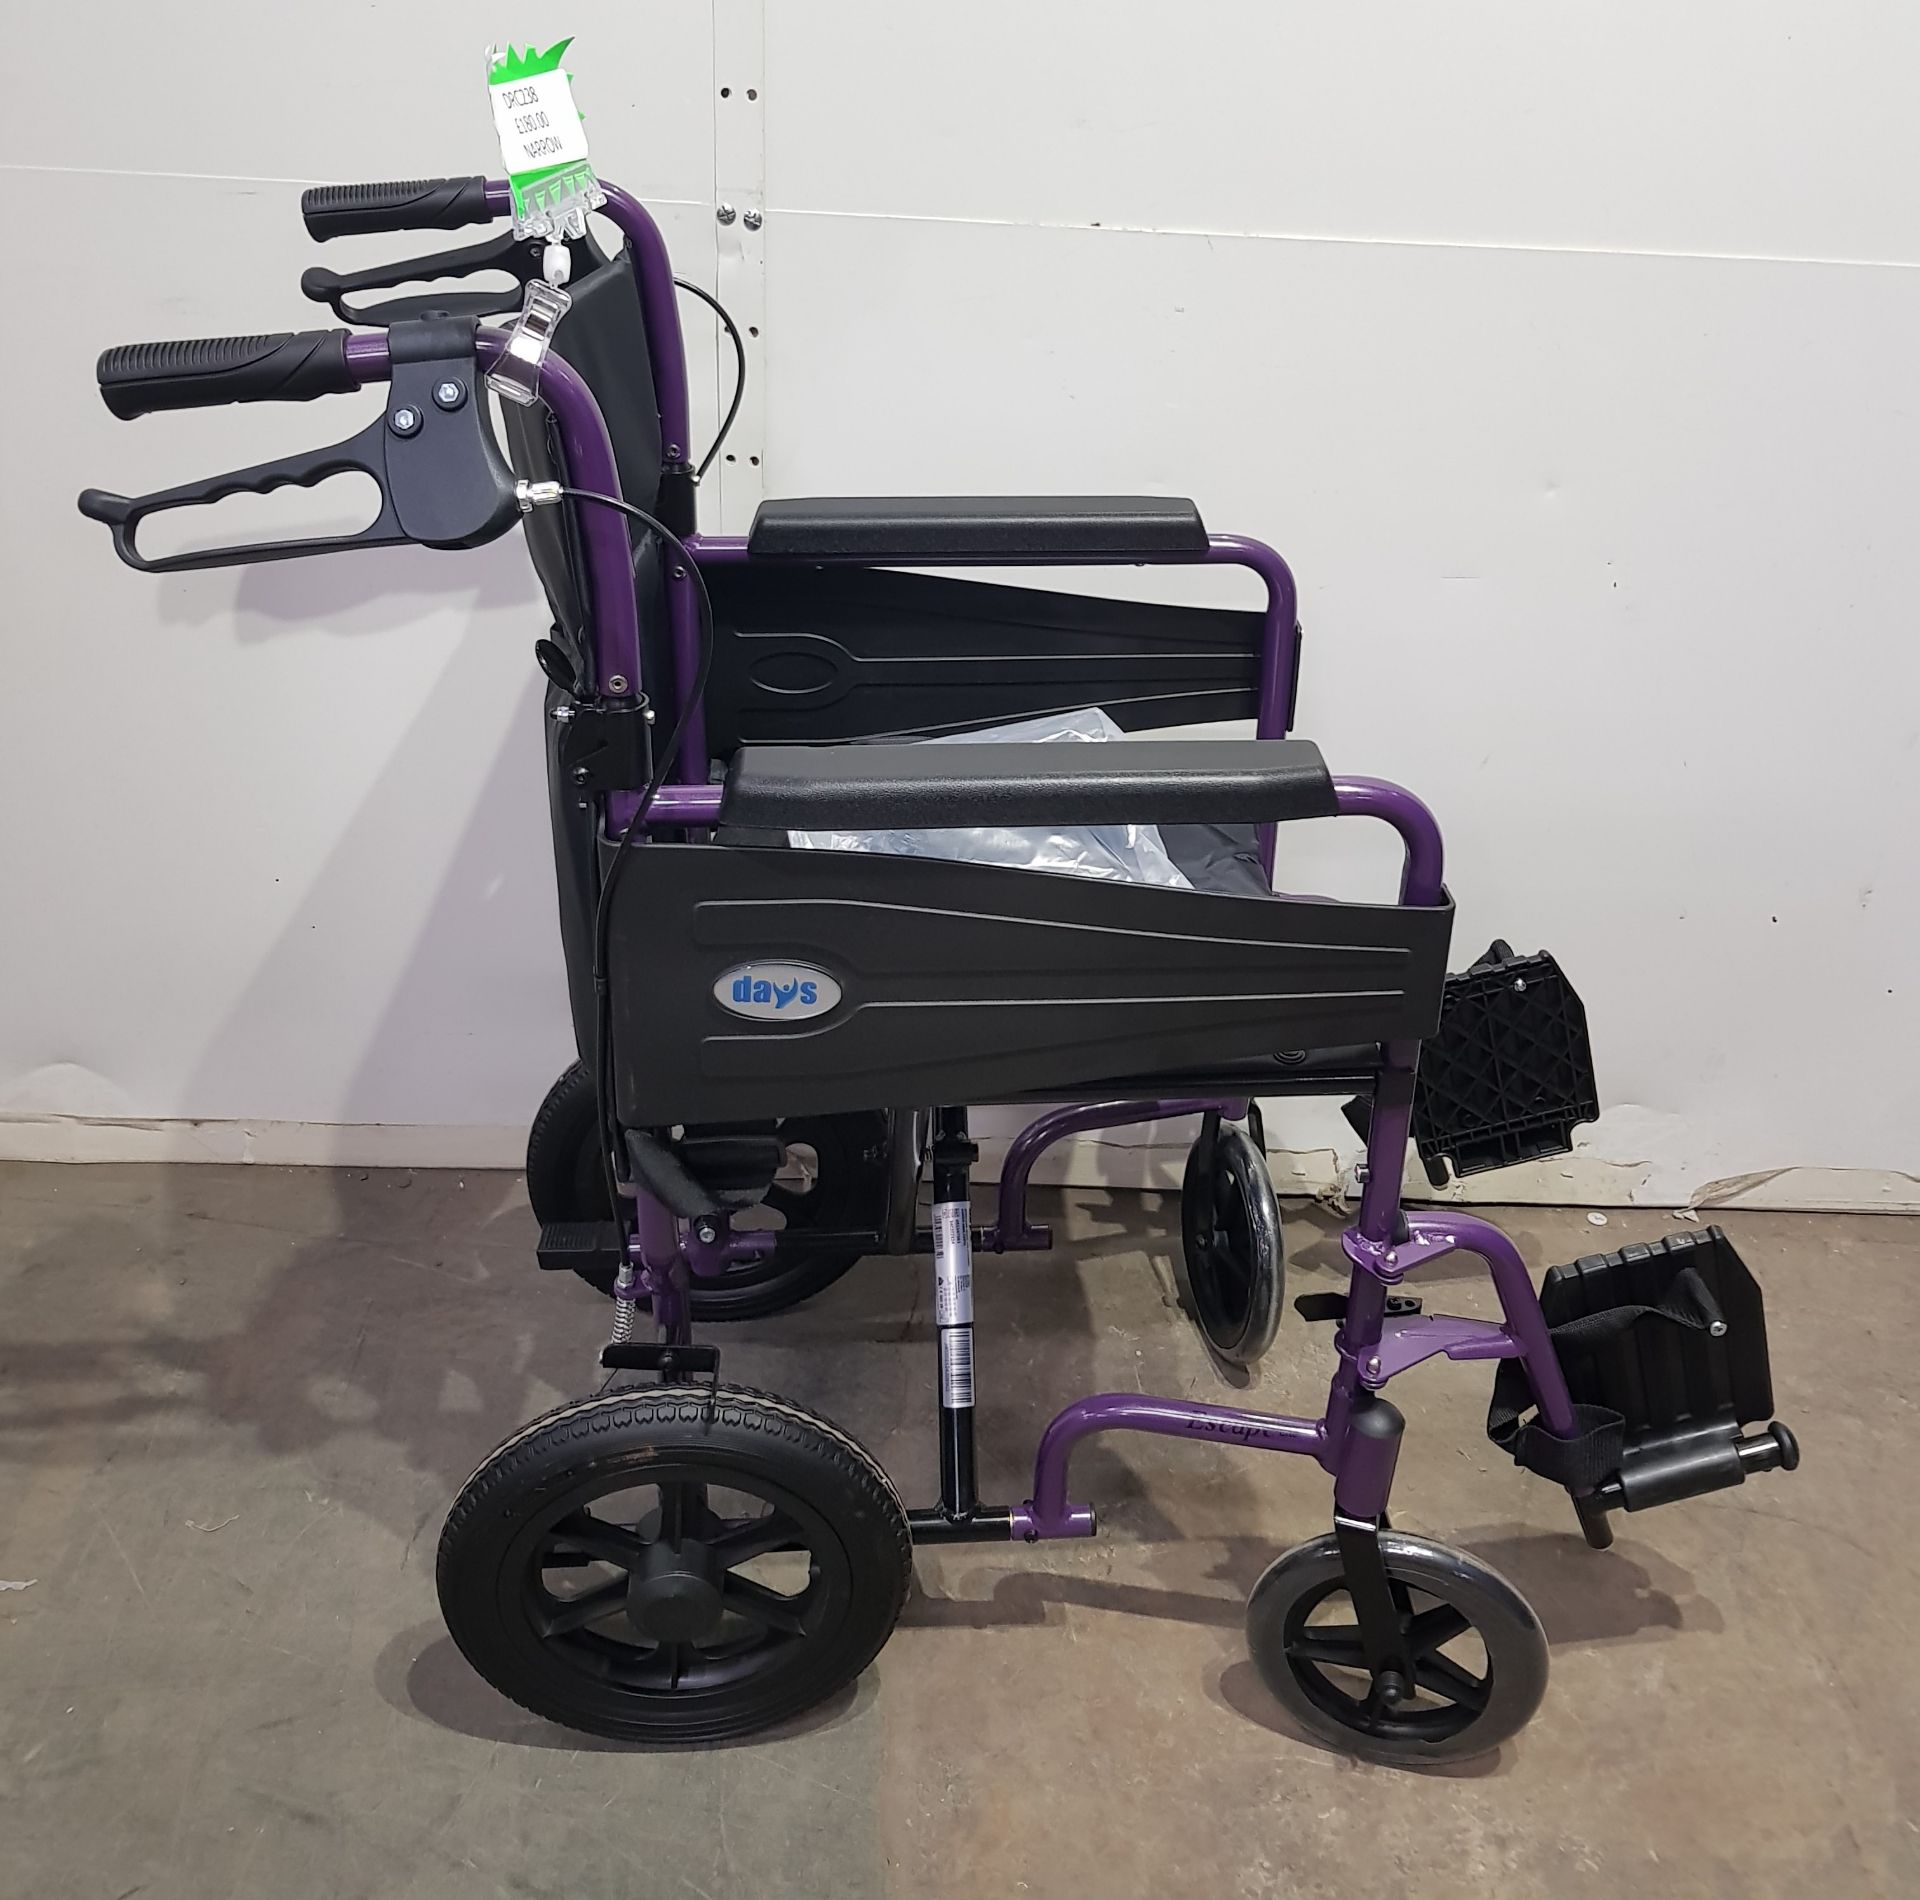 Days Escape Lite Wheelchair - Image 2 of 4